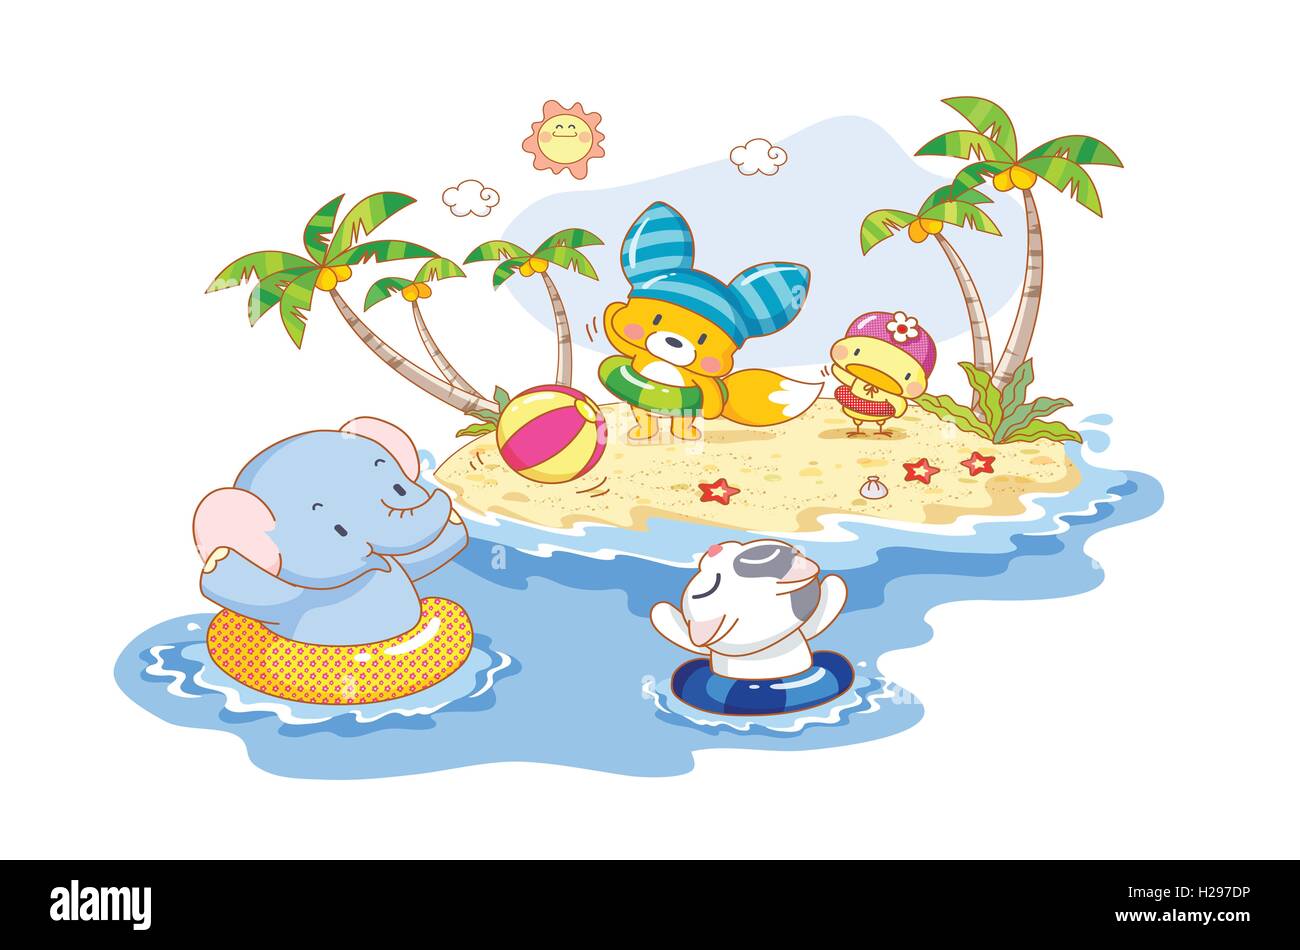 animals cartoon are playing on the beach Stock Photo